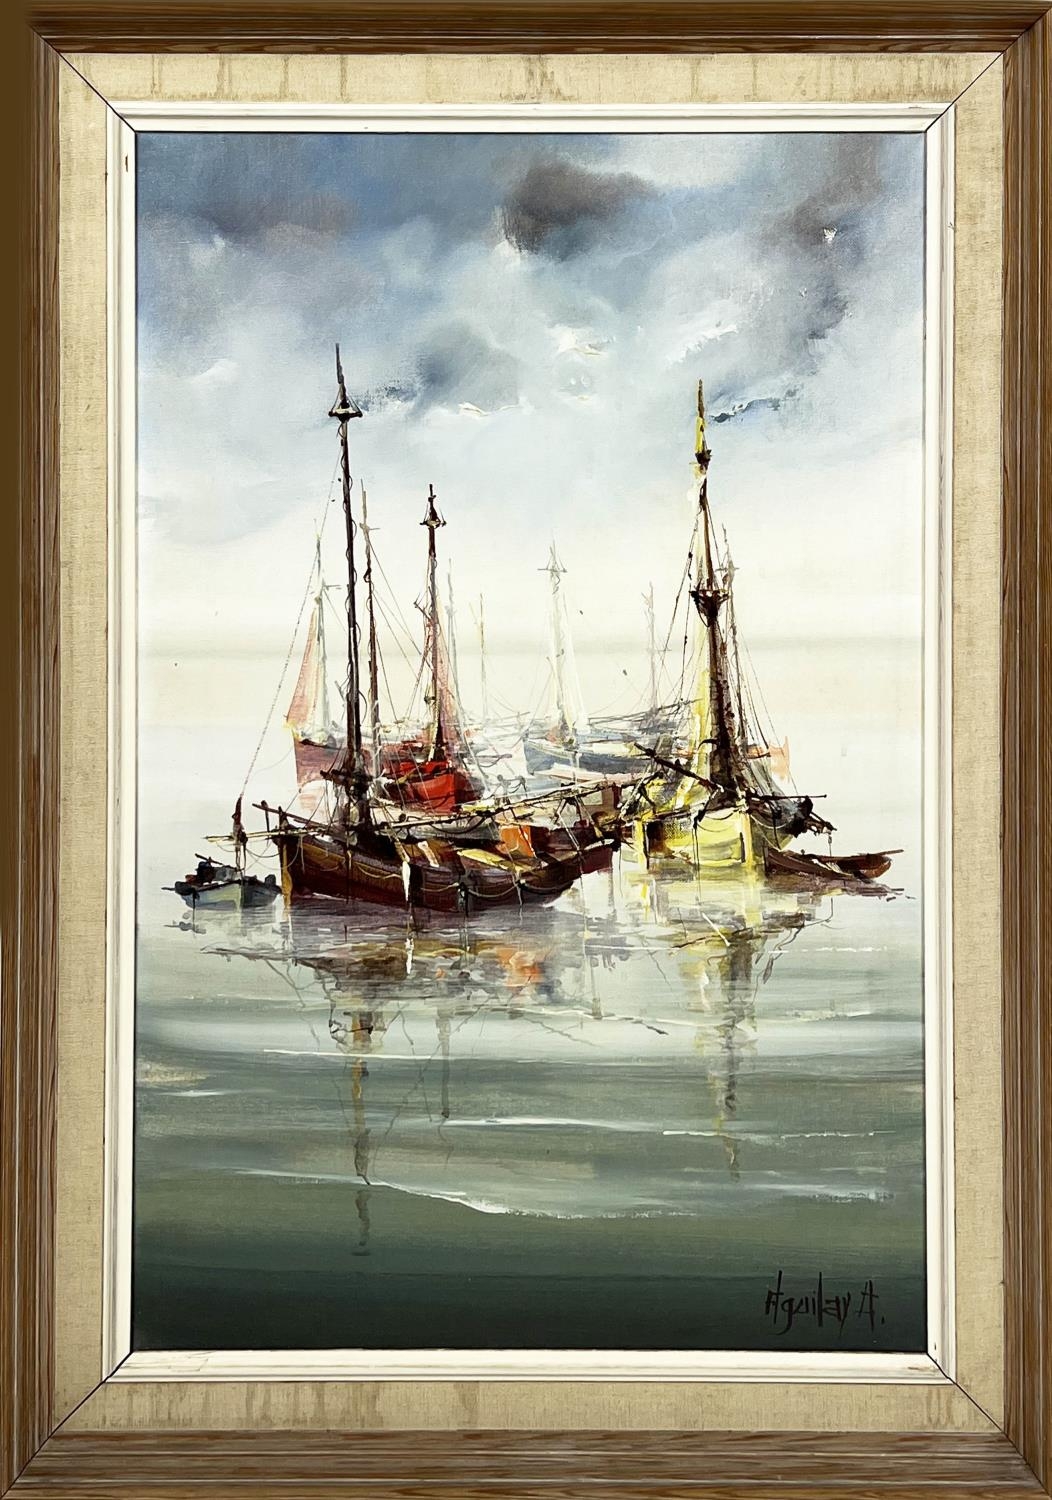 JORGE AGUILAR AGON (B.1936, Spain), 'Fishing boats', oil on canvas, 75cm x 49cm, signed, framed.